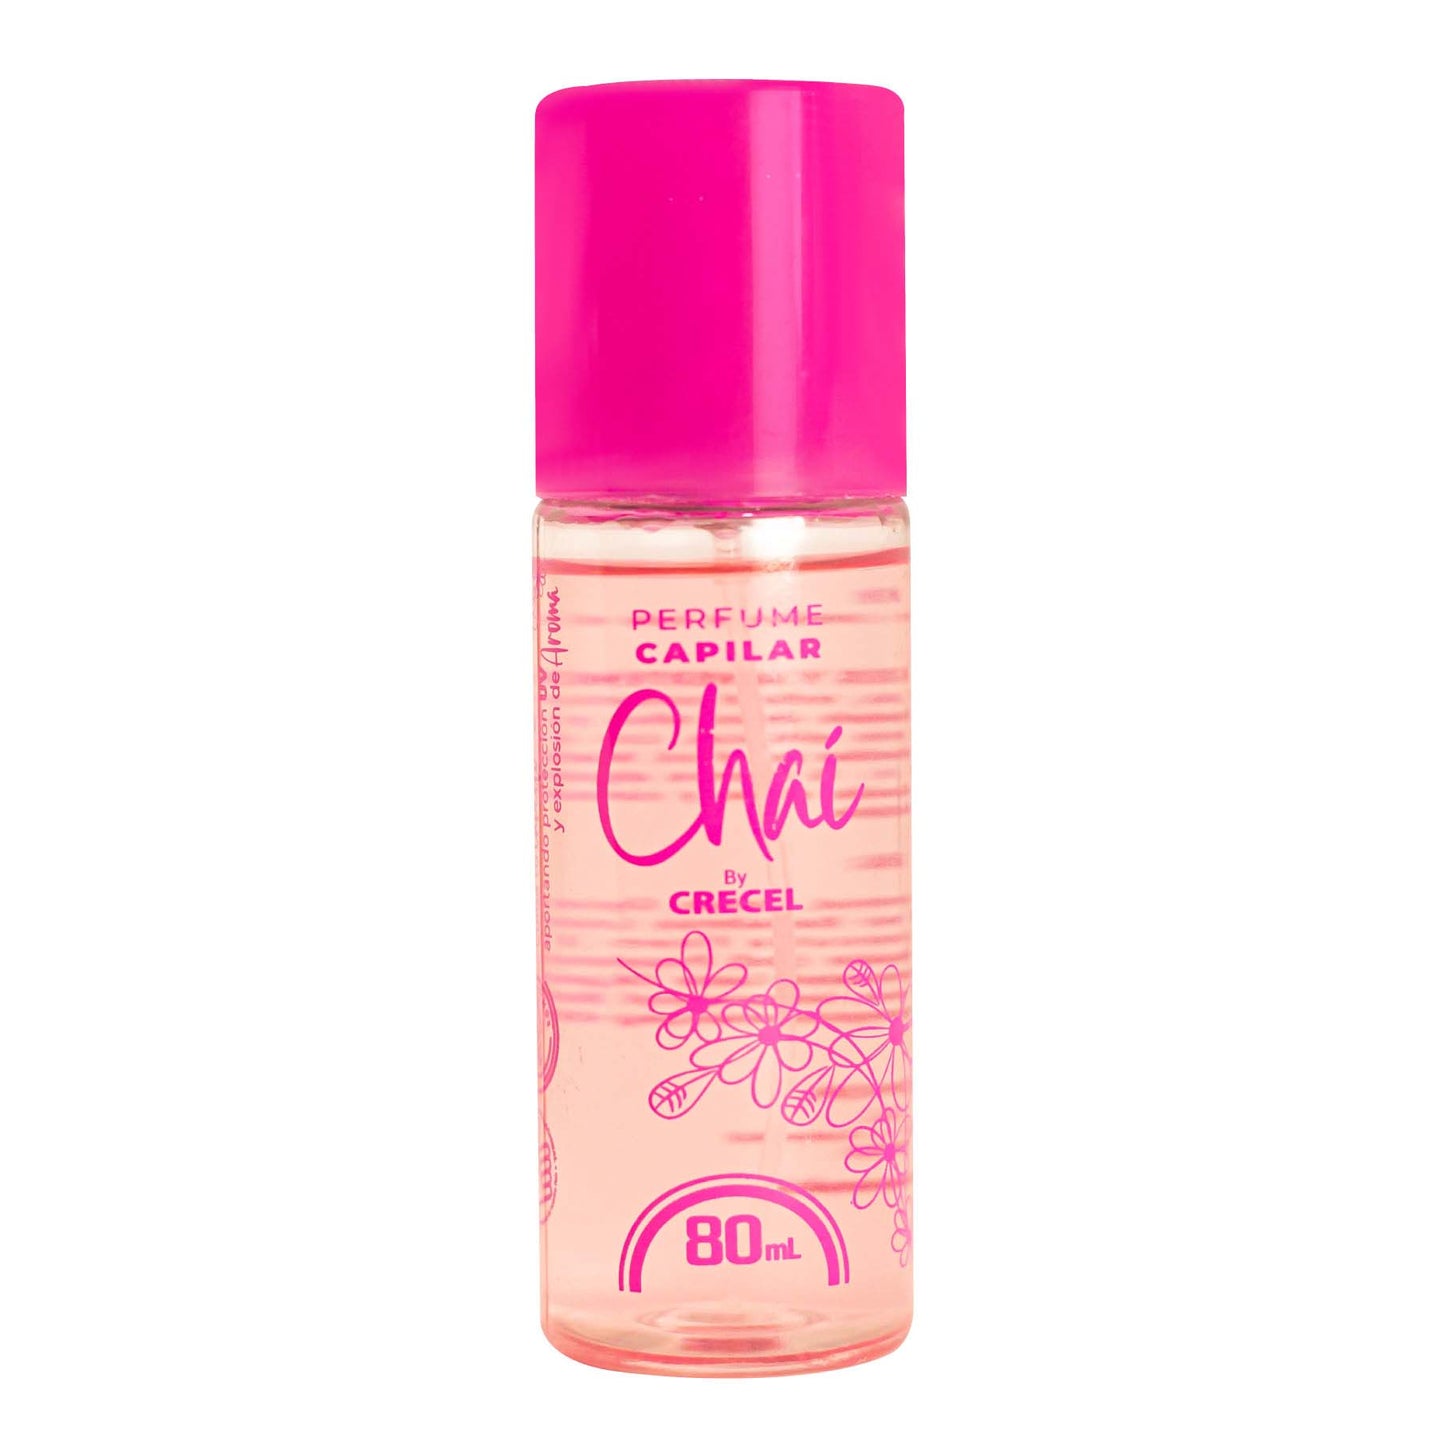 CHAI - Perfume Capilar